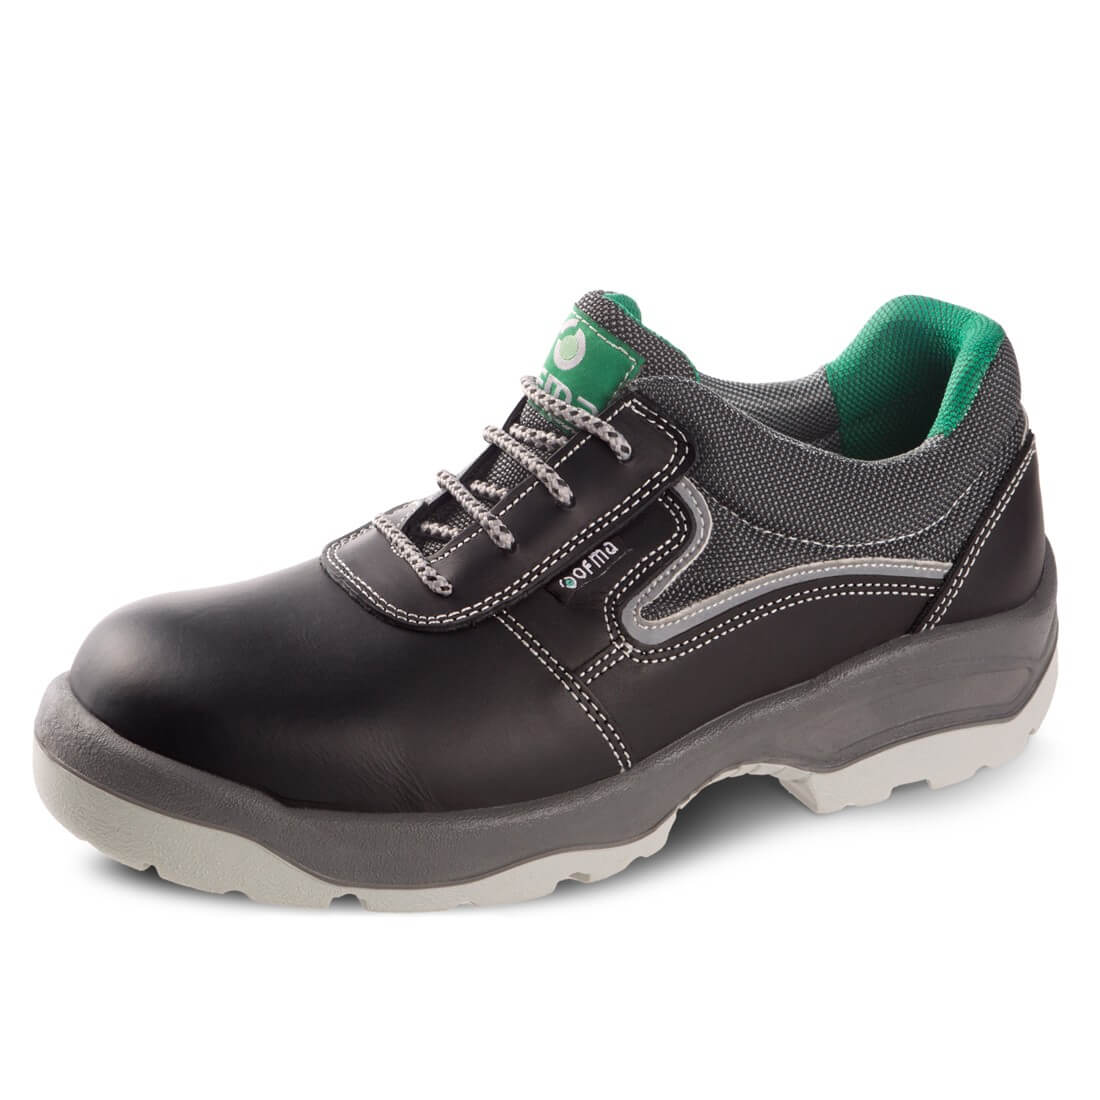 Pantof Odin S3+CI+SRC - Incaltaminte de protectie | Bocanci, Pantofi, Sandale, Cizme